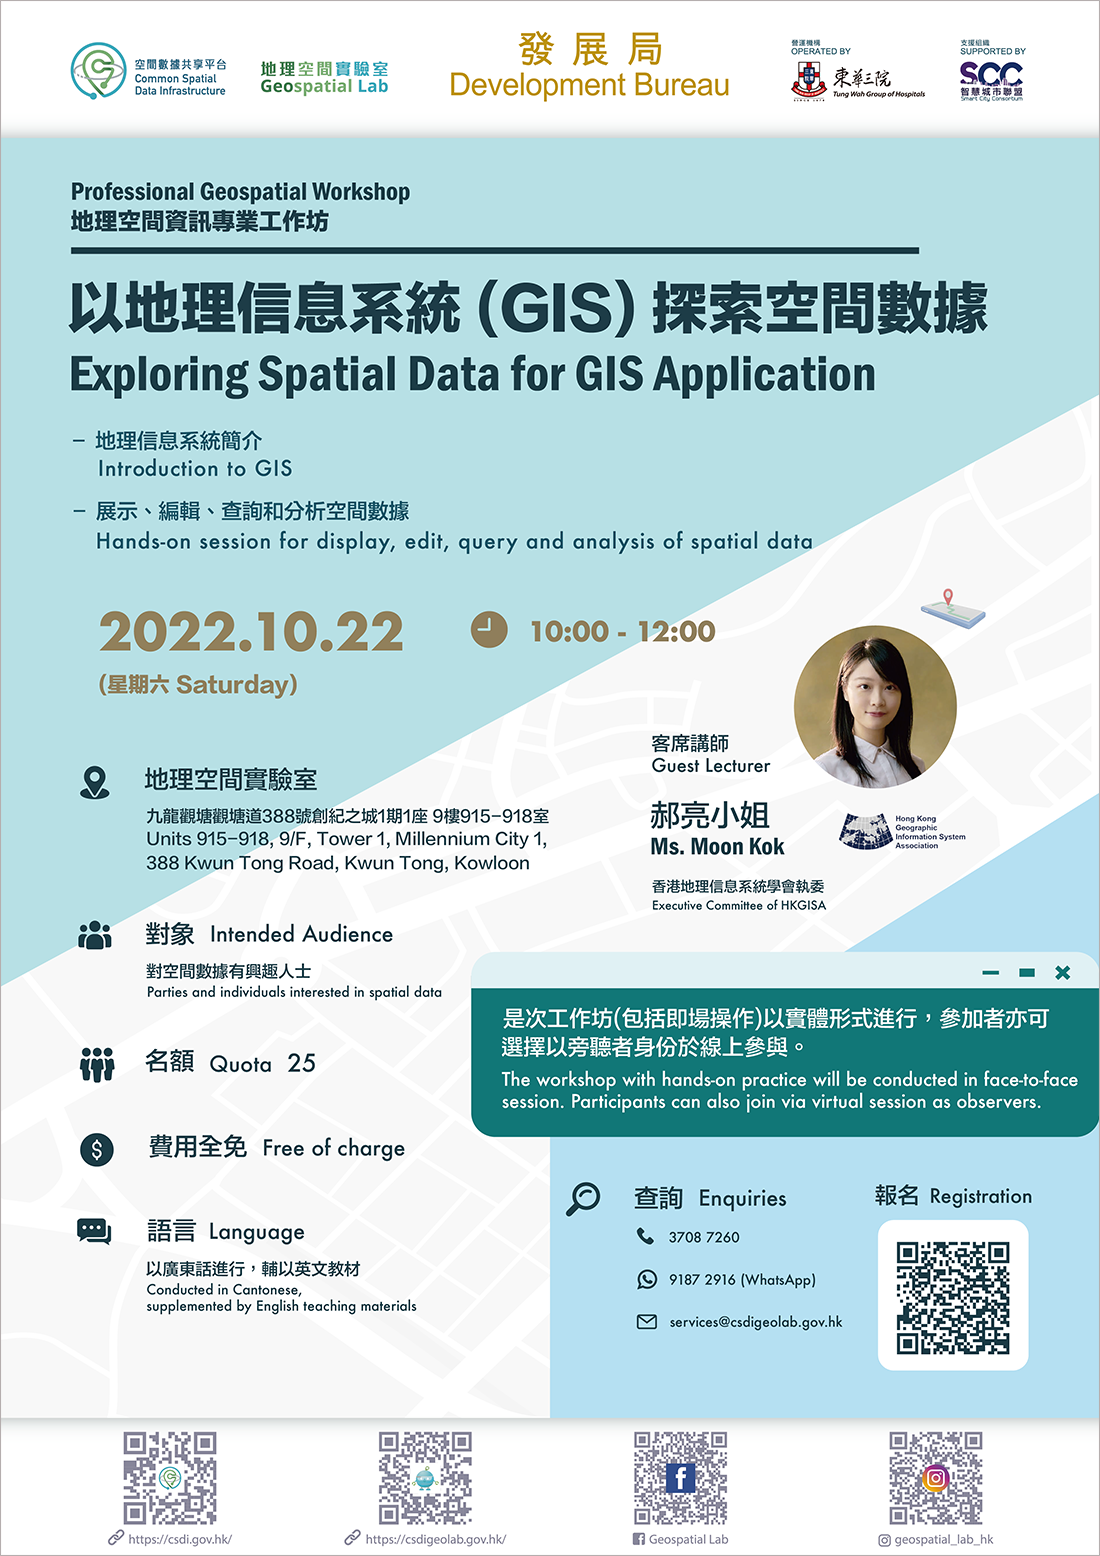 Professional Geospatial Workshop "Exploring Spatial Data for GIS Application"